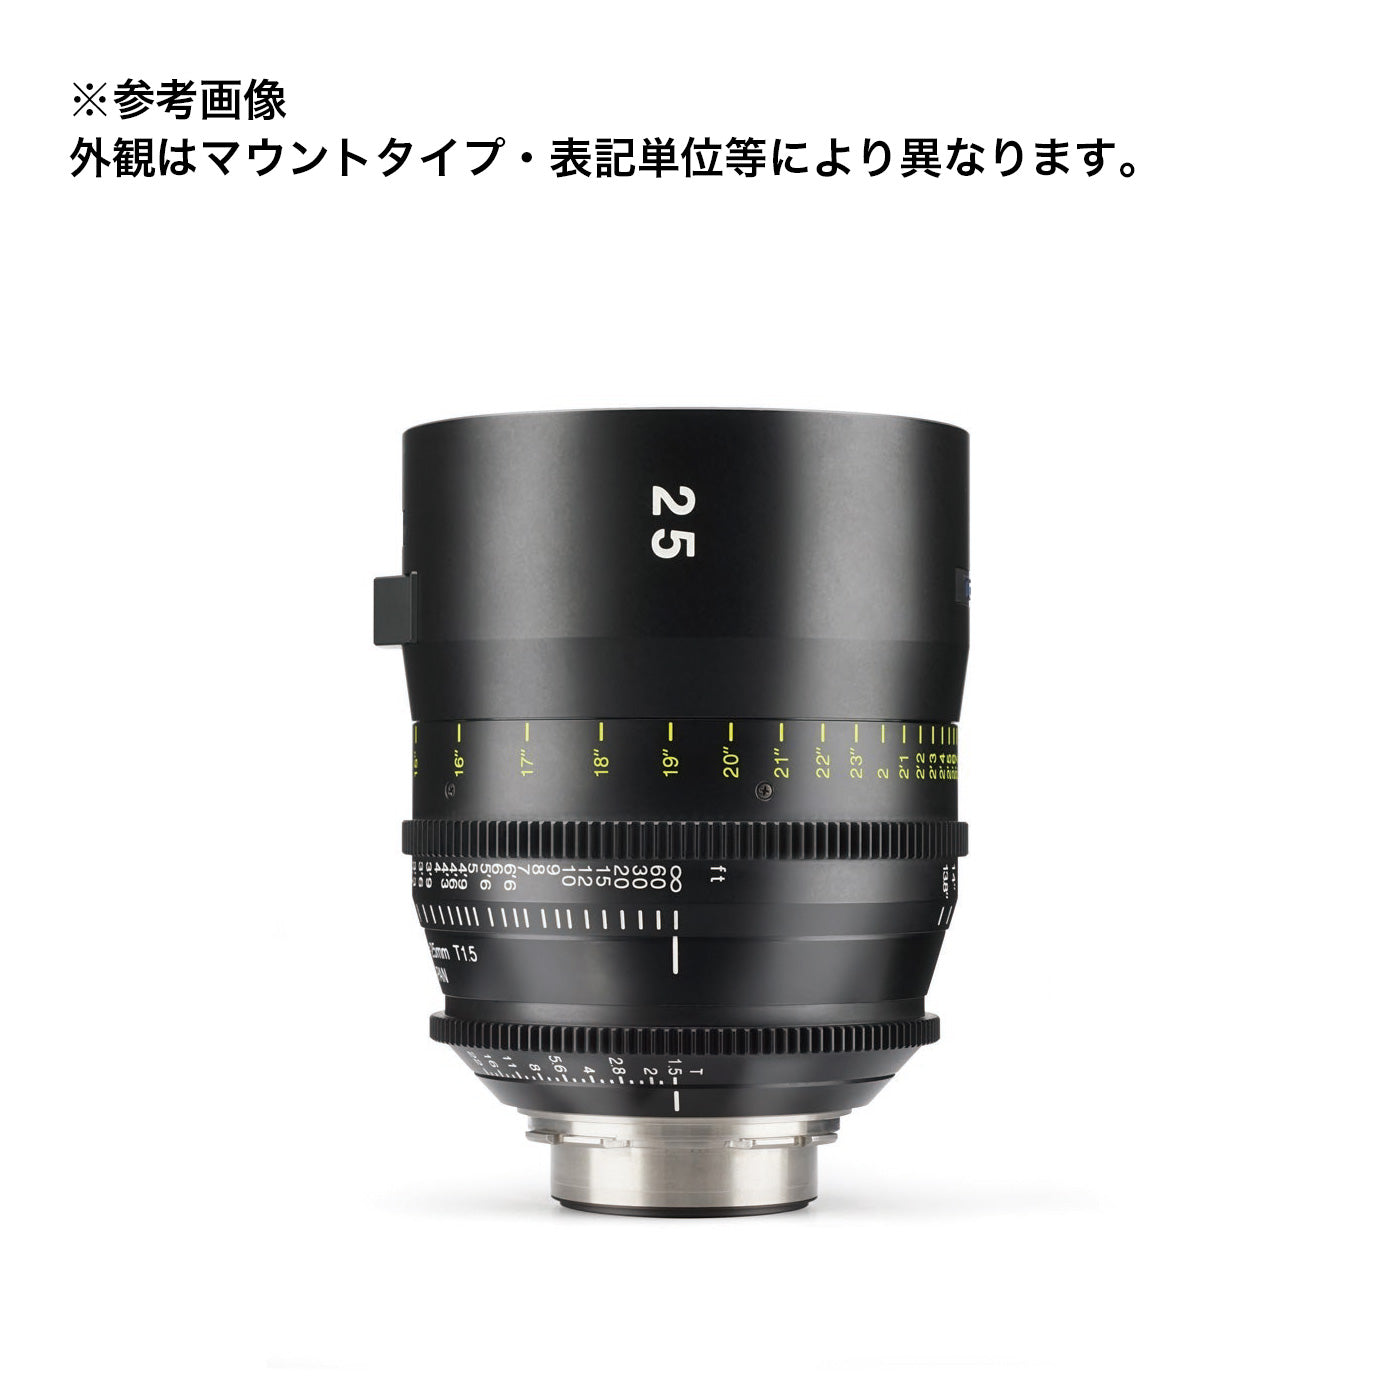 Tokina Cinema Prime Lens VISTA 25mm T1.5 CINEMA LENS Micro Four Thirds Mount Metric [264139]